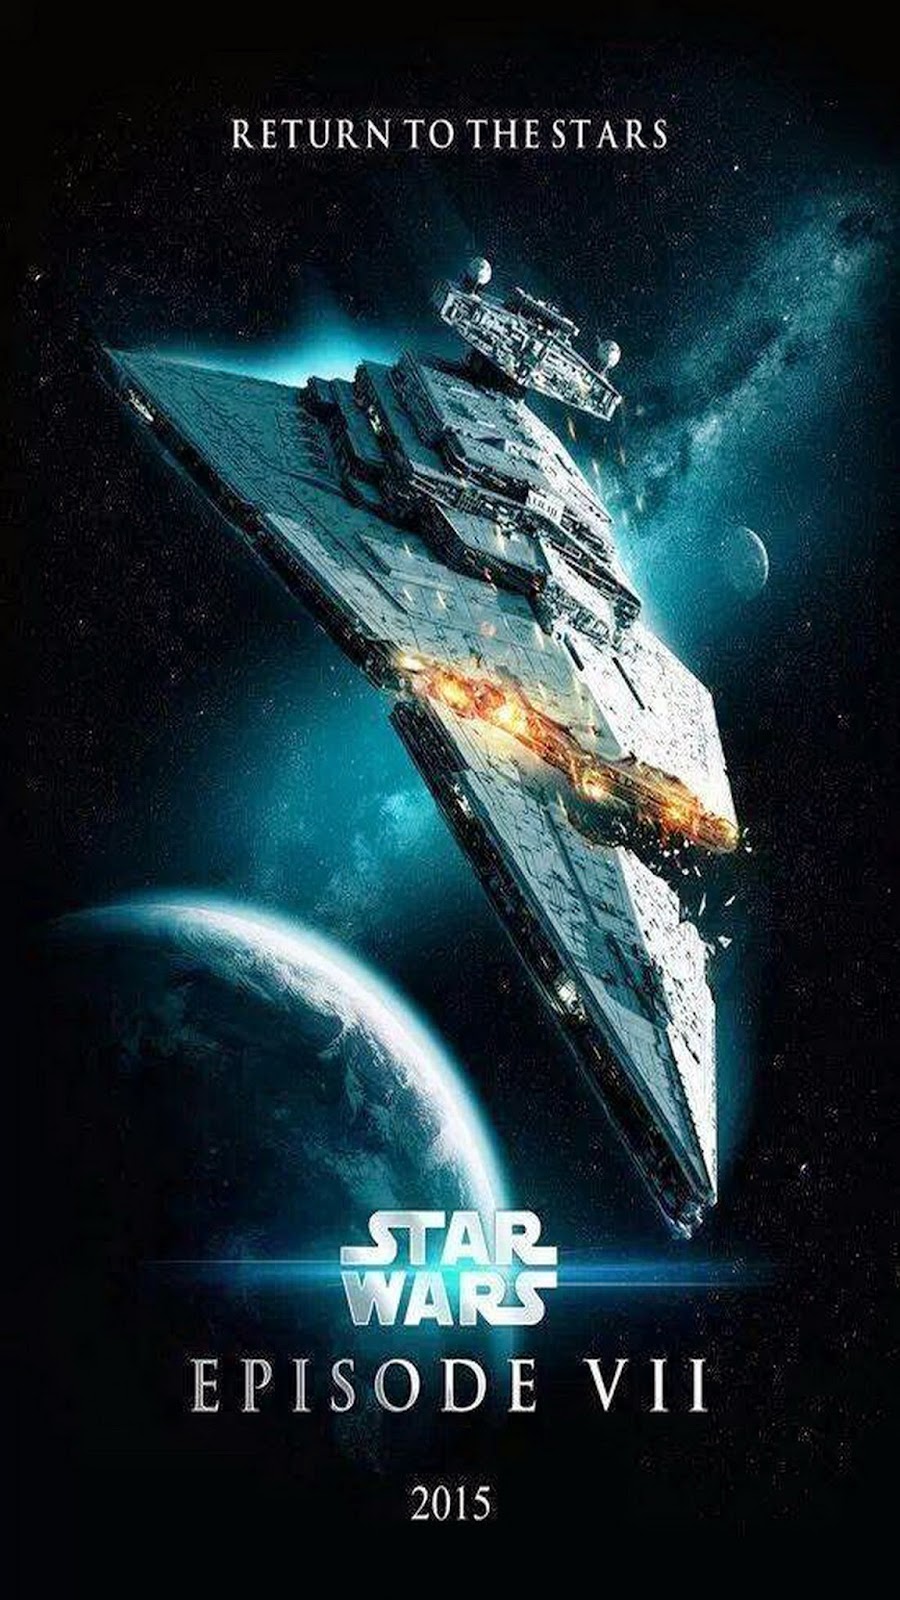 the force awakens full movie online free